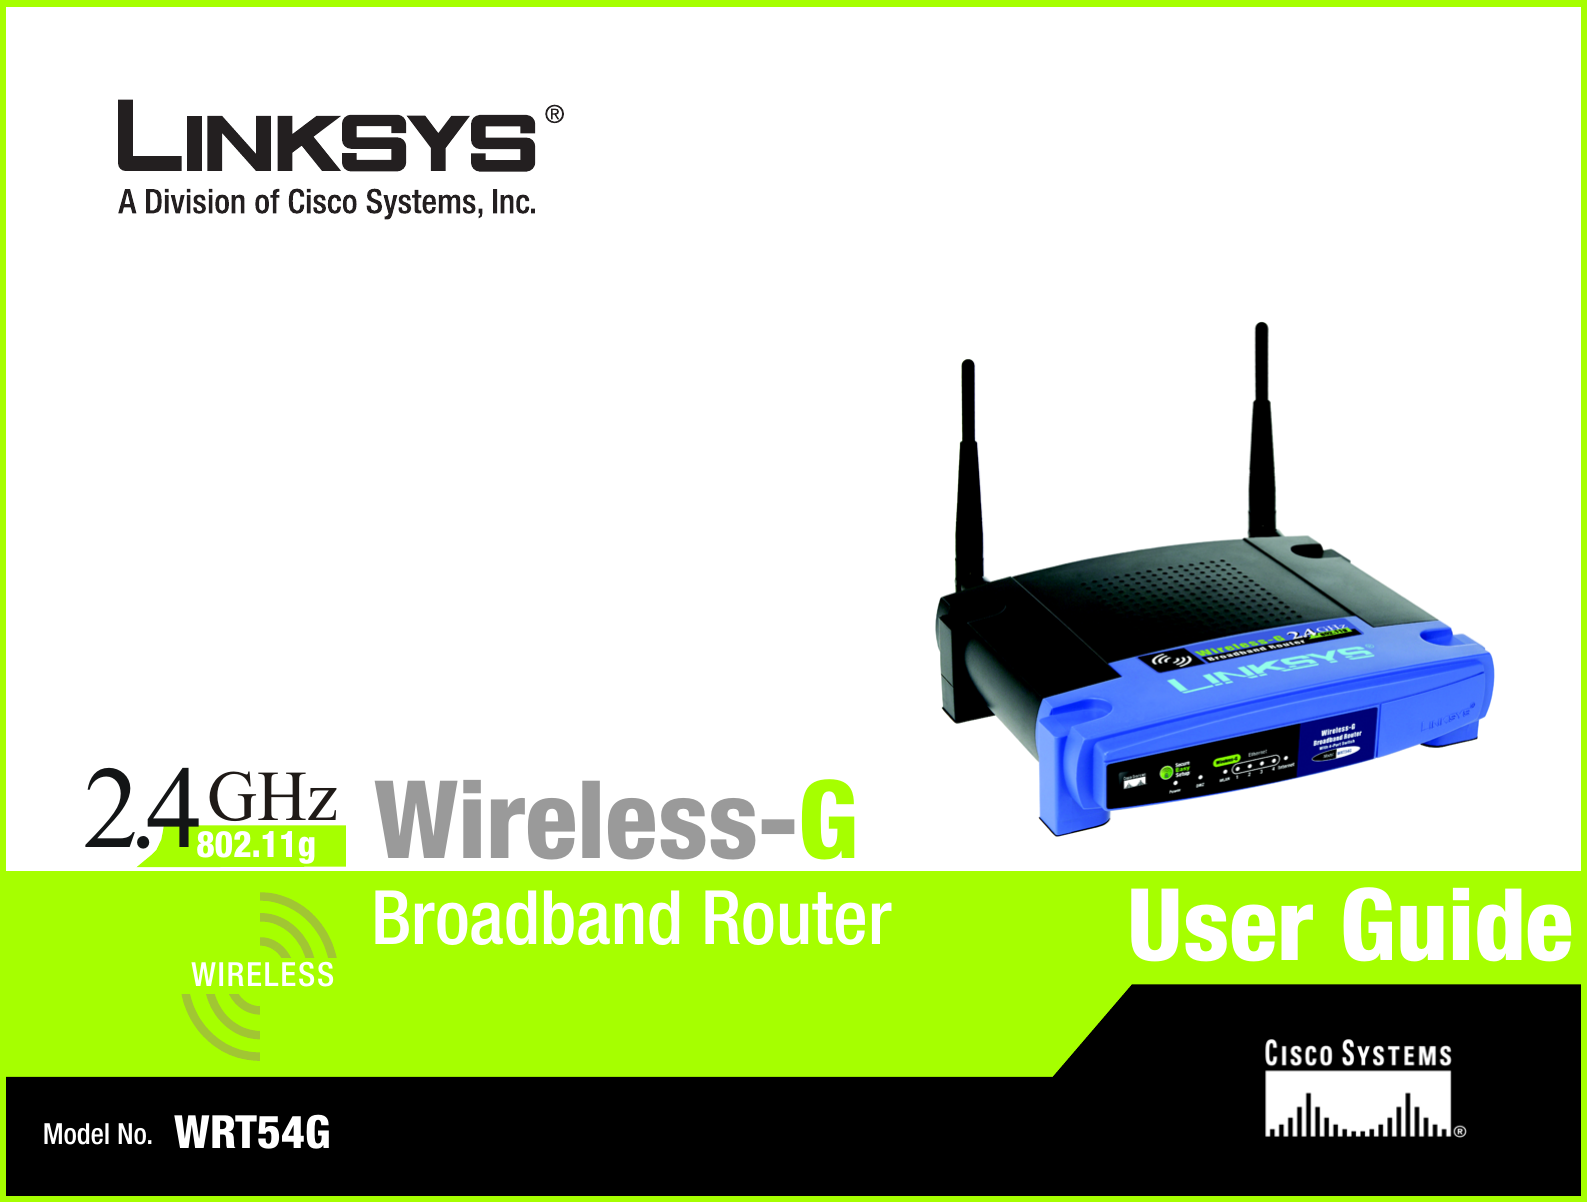 Model No.Broadband RouterWireless-GWRT54GUser GuideWIRELESSGHz2.4802.11g